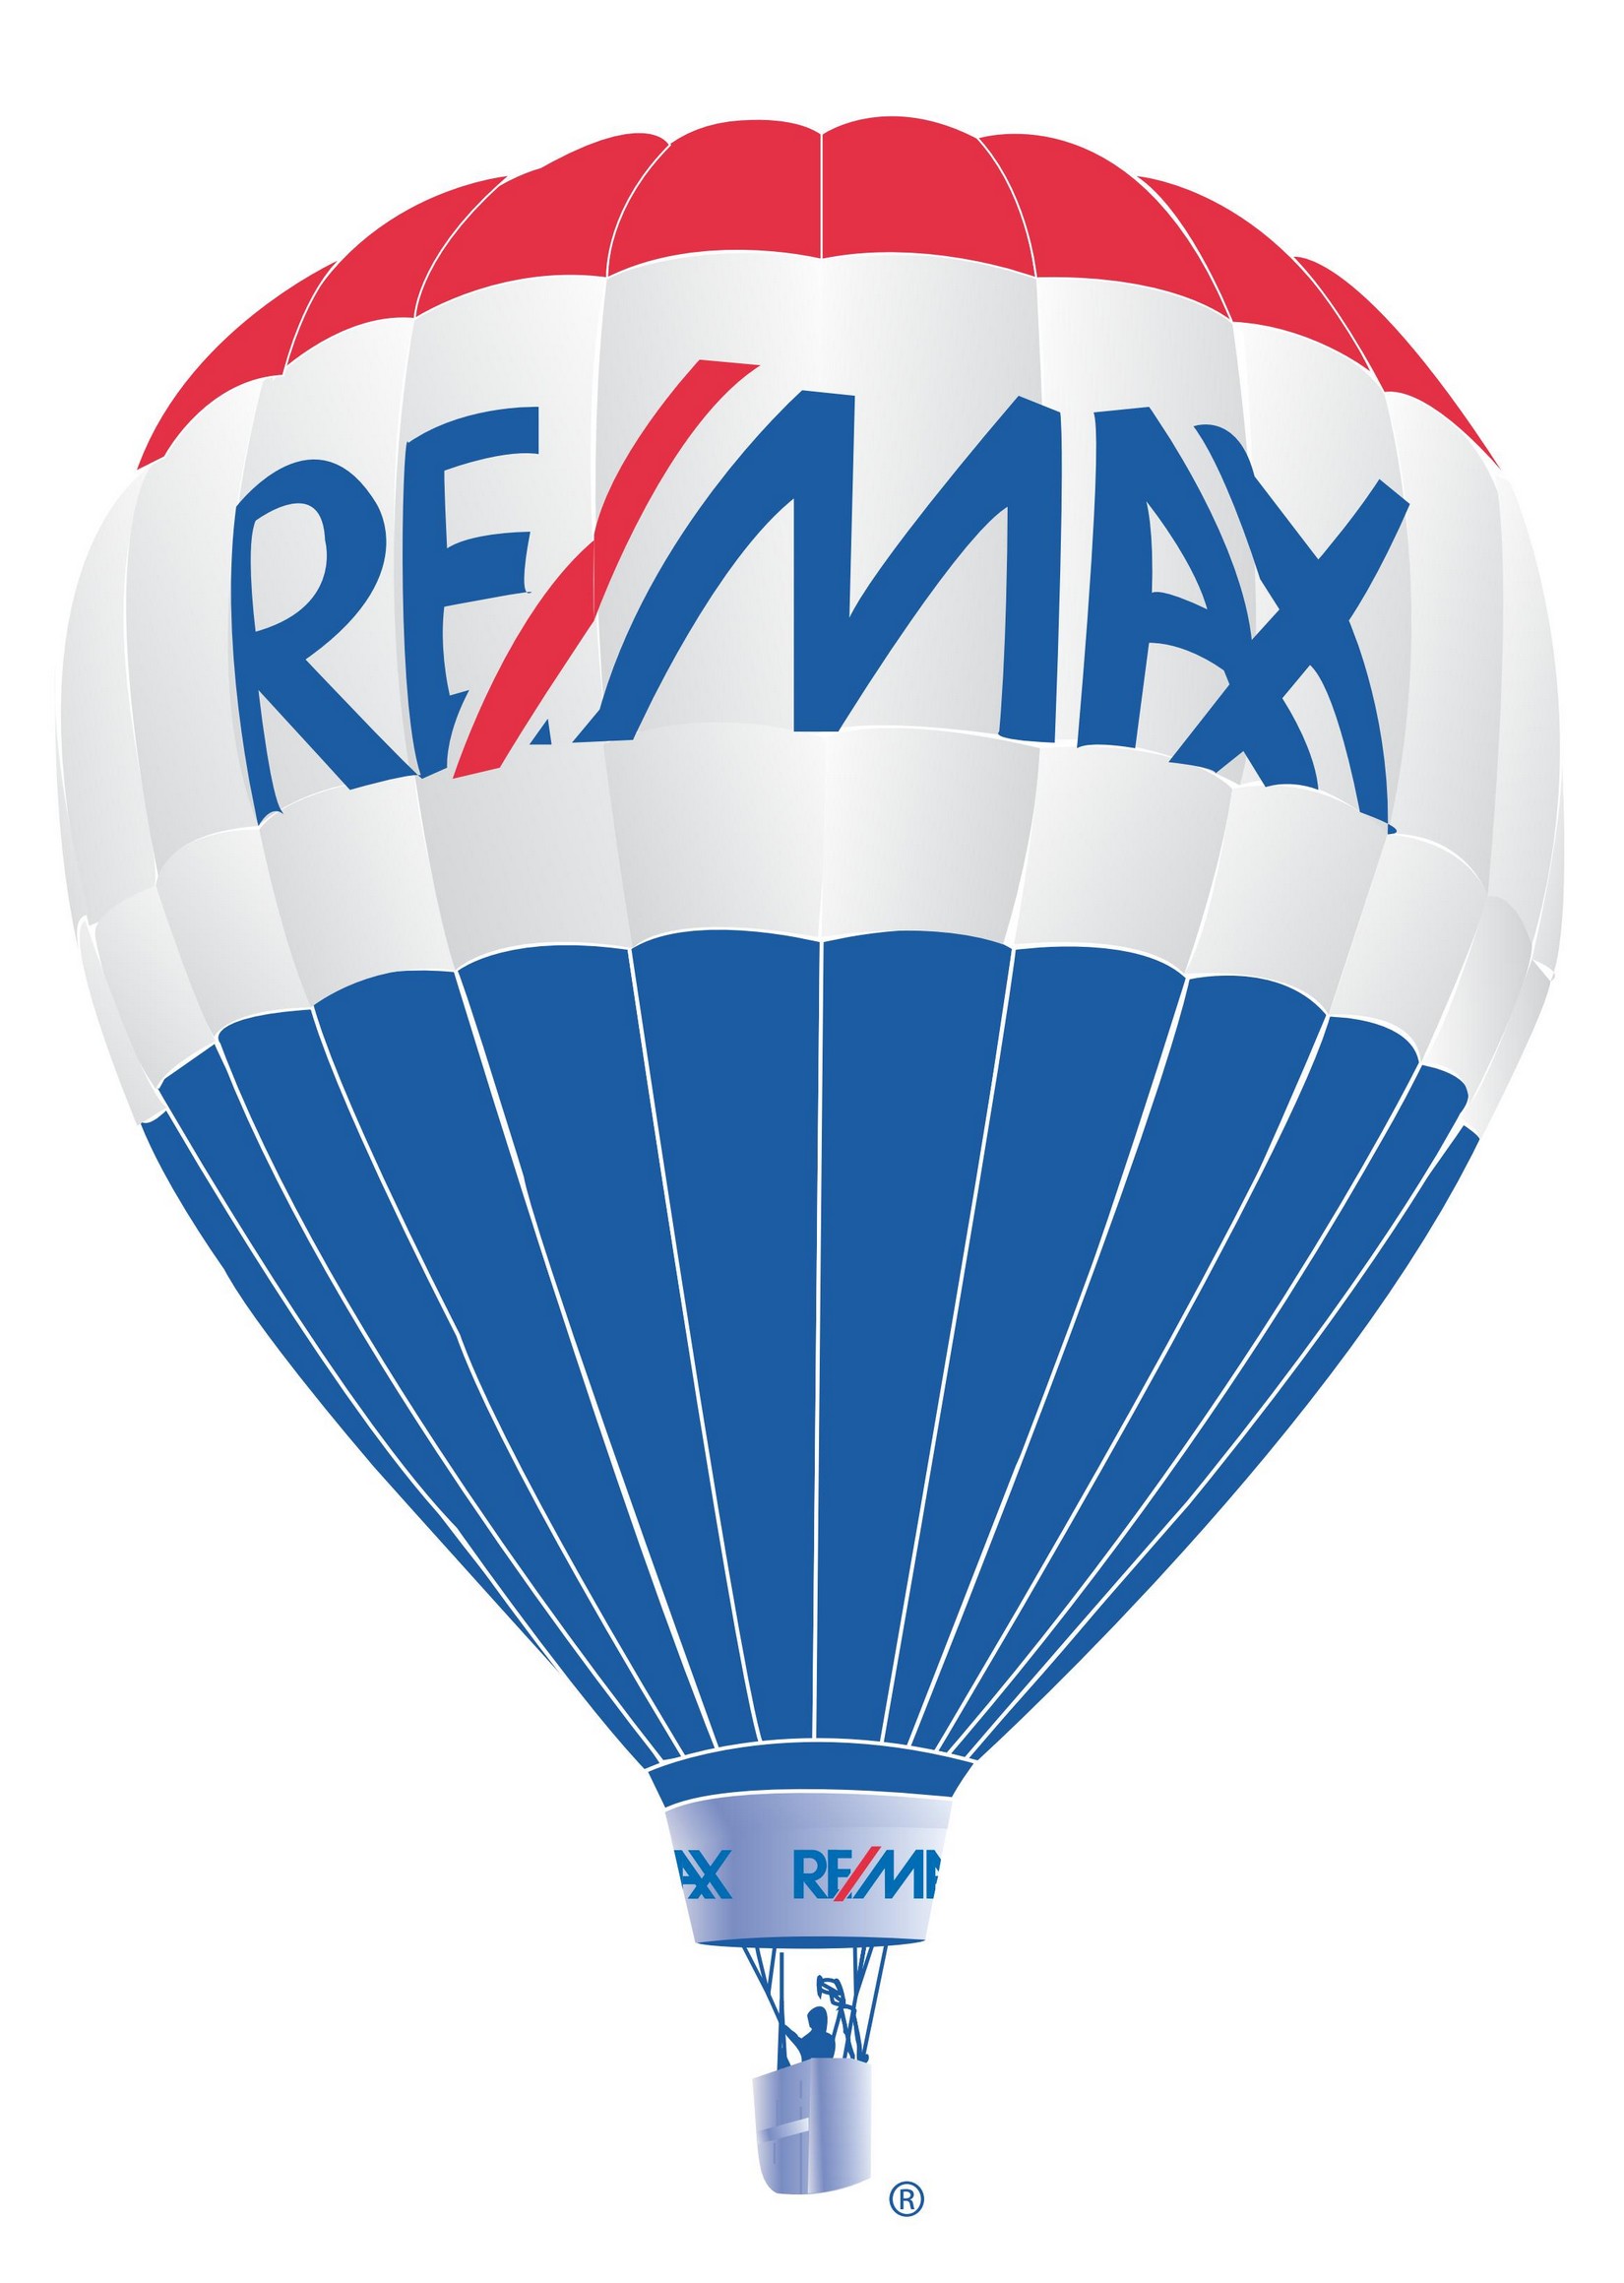 Remax Balloon Clipart.